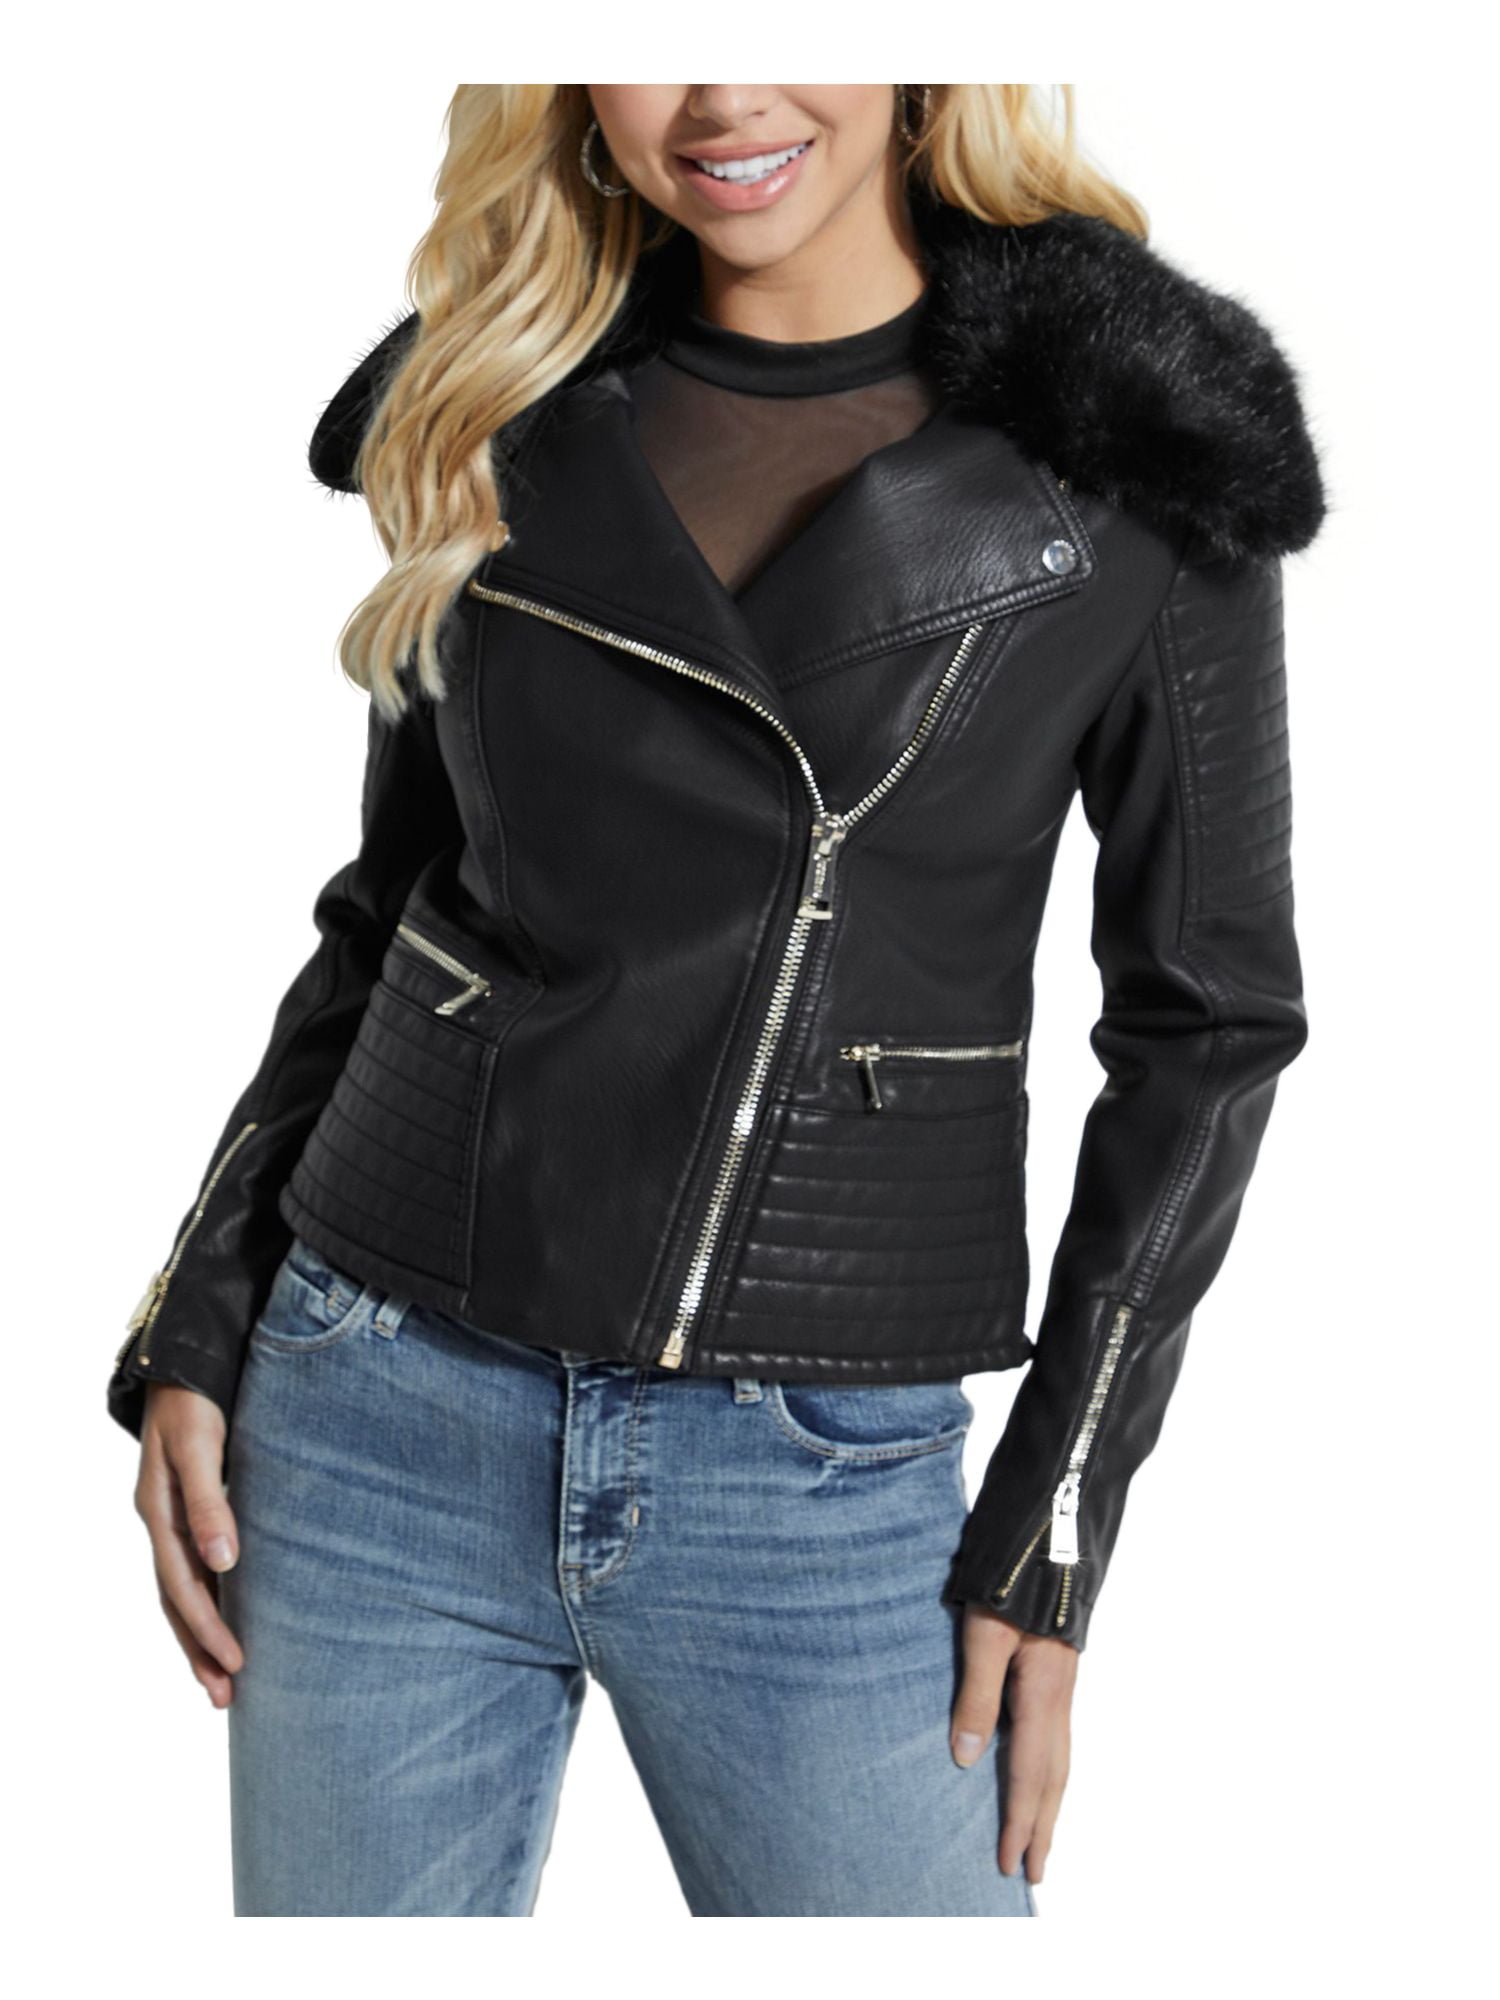 Tuesday Ten Pig GUESS $128 Womens New Black Faux Leather Faux Fur Motorcycle Jacket XS B+B  - Walmart.com